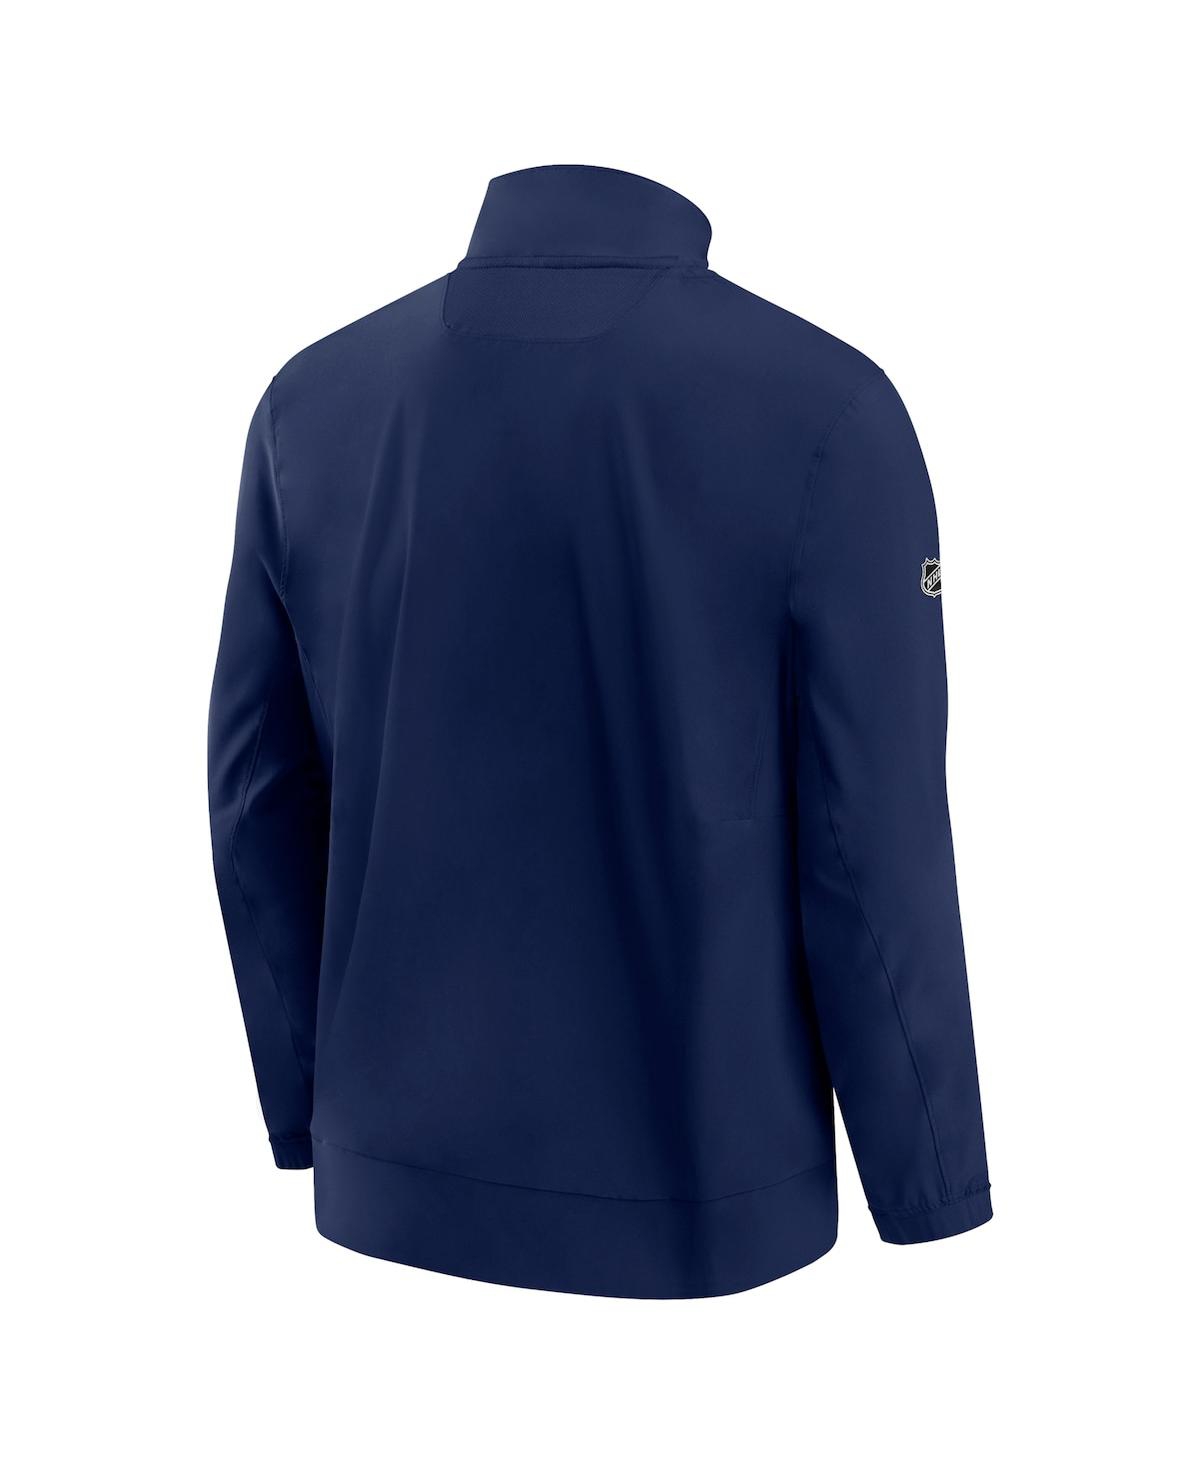 Shop Fanatics Men's  Navy Washington Capitals Authentic Pro Rink Coaches Full-zip Jacket